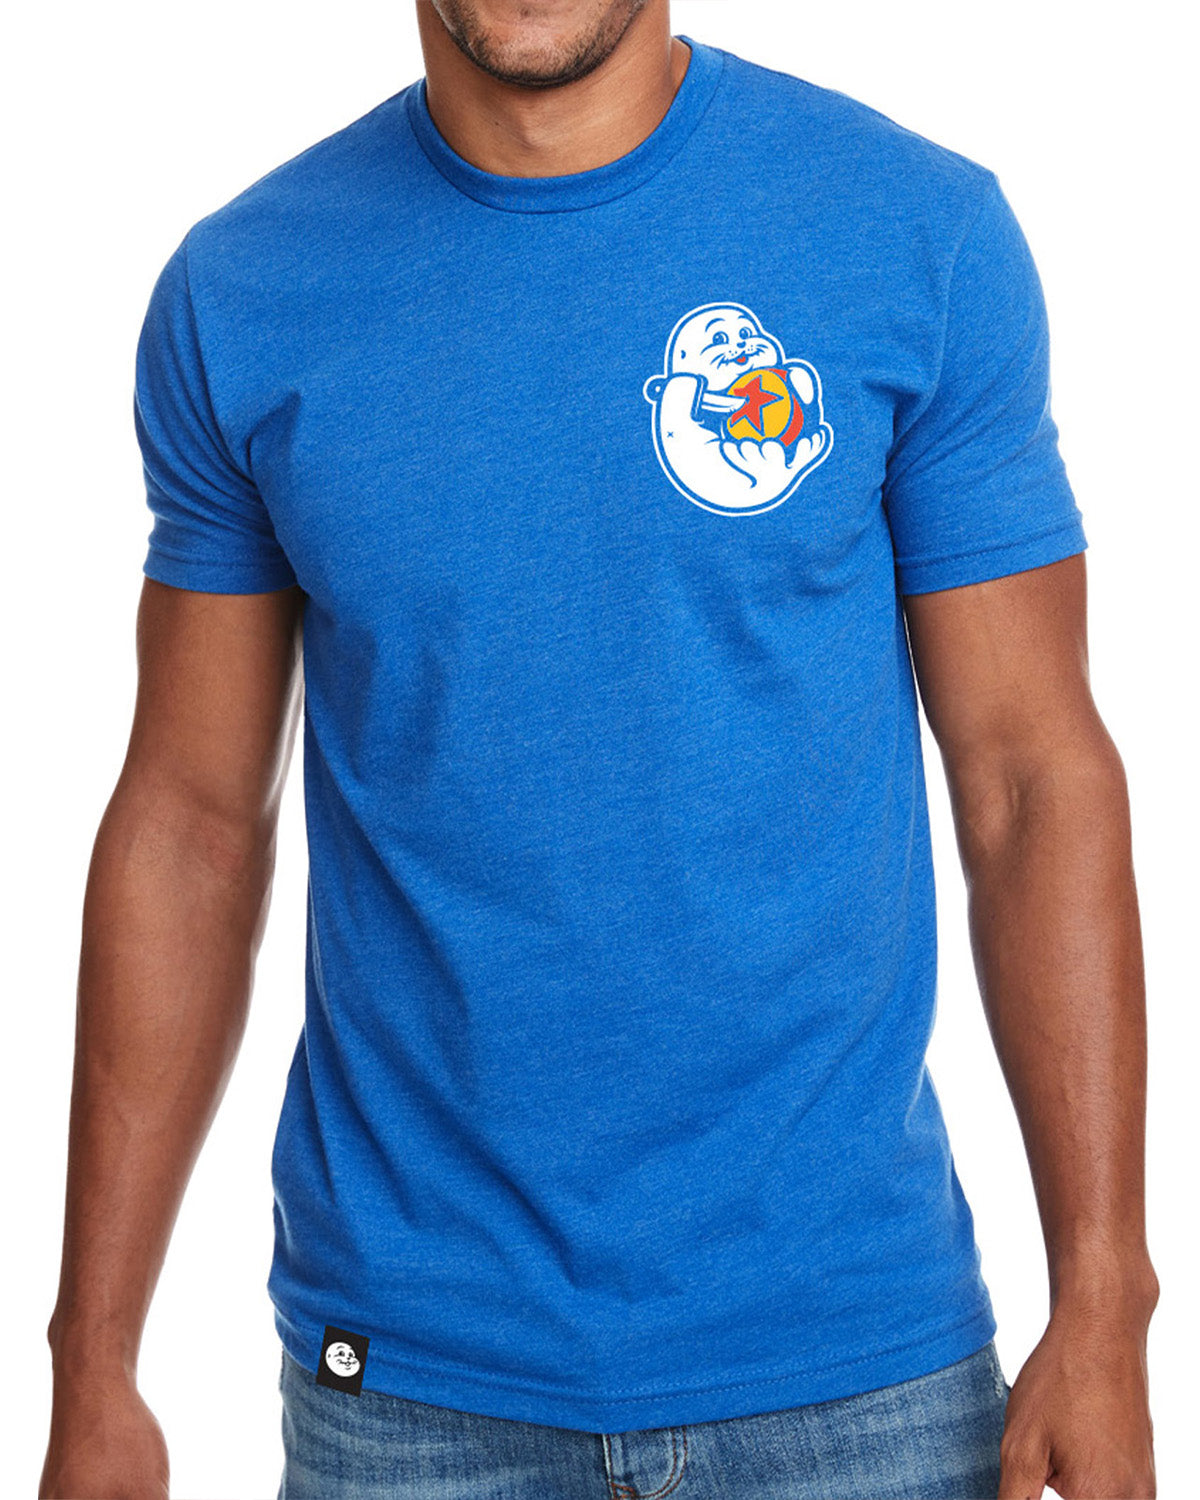 Phoque Apparel - T-Shirt : Royal Blue